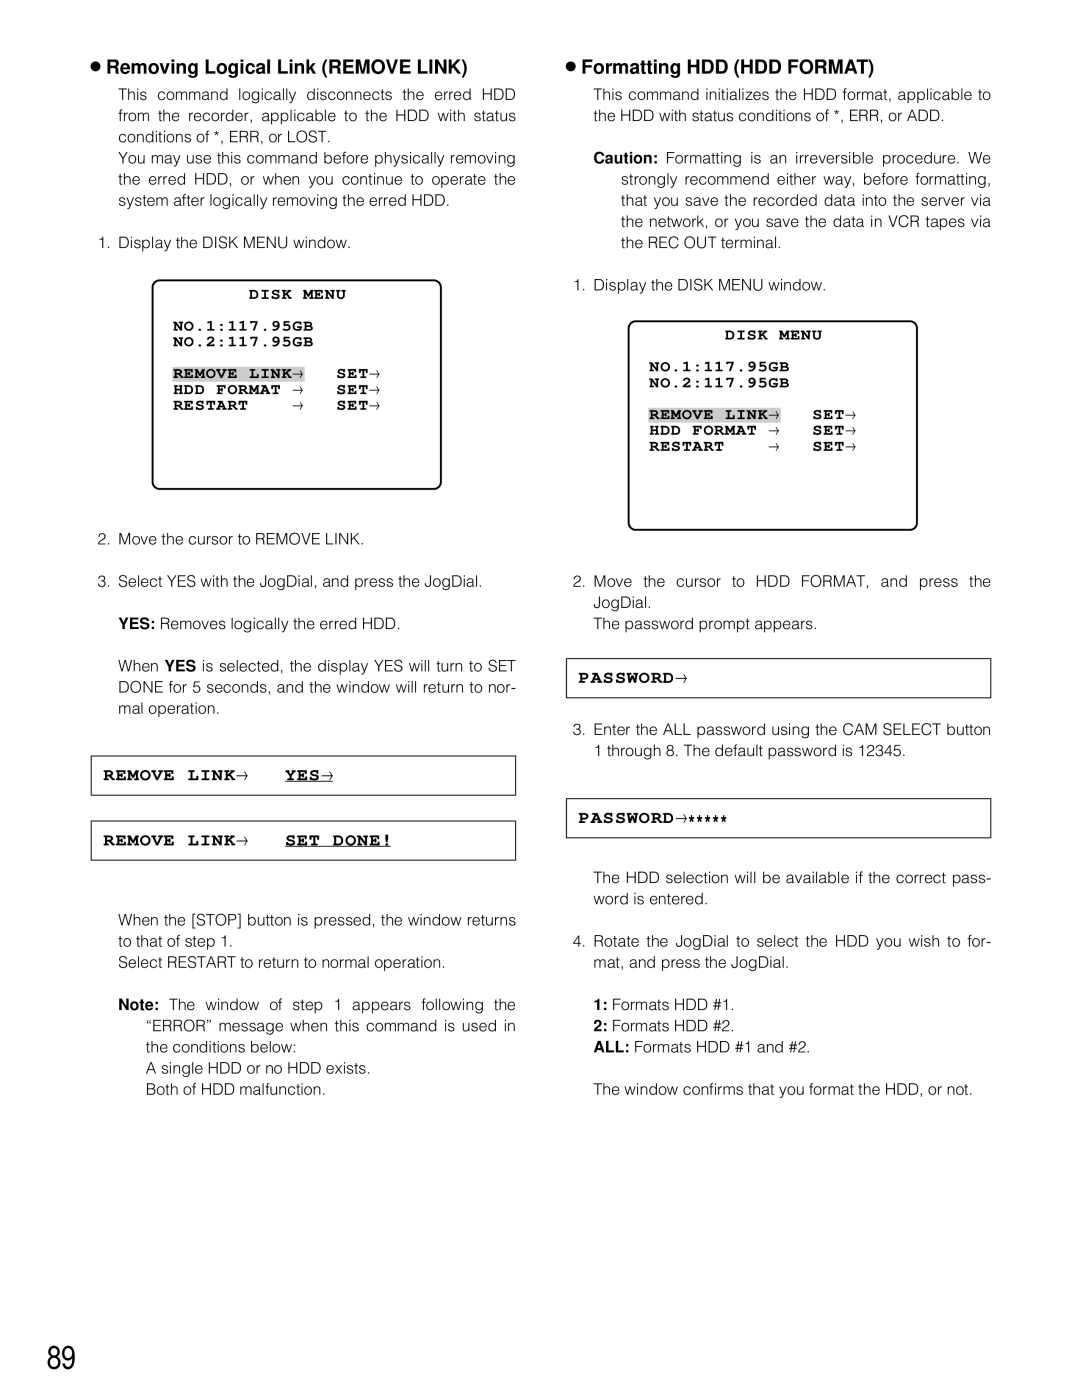 Panasonic WJ-HD200 manual Remove Link→ Yes→, Set Done, Password→ 